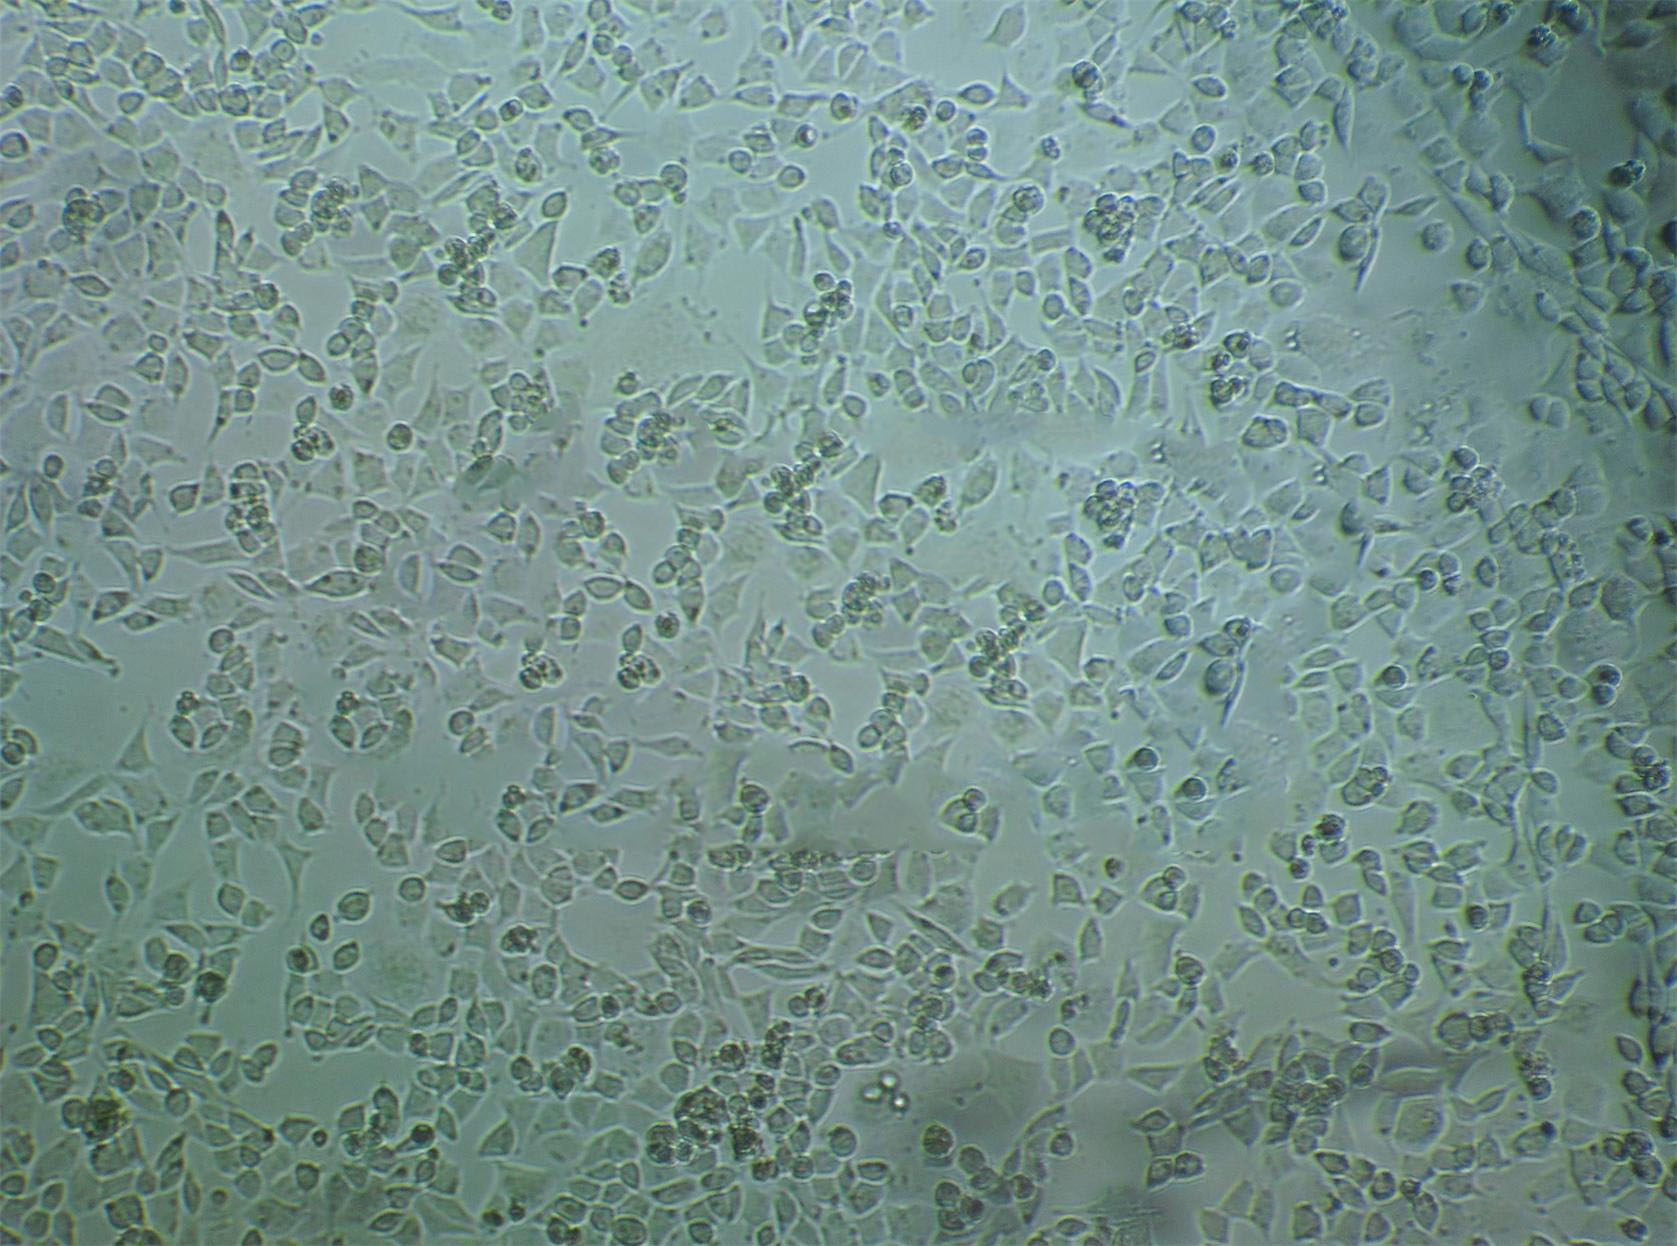 H19-7 Cell|大鼠海马神经元细胞,H19-7 Cell